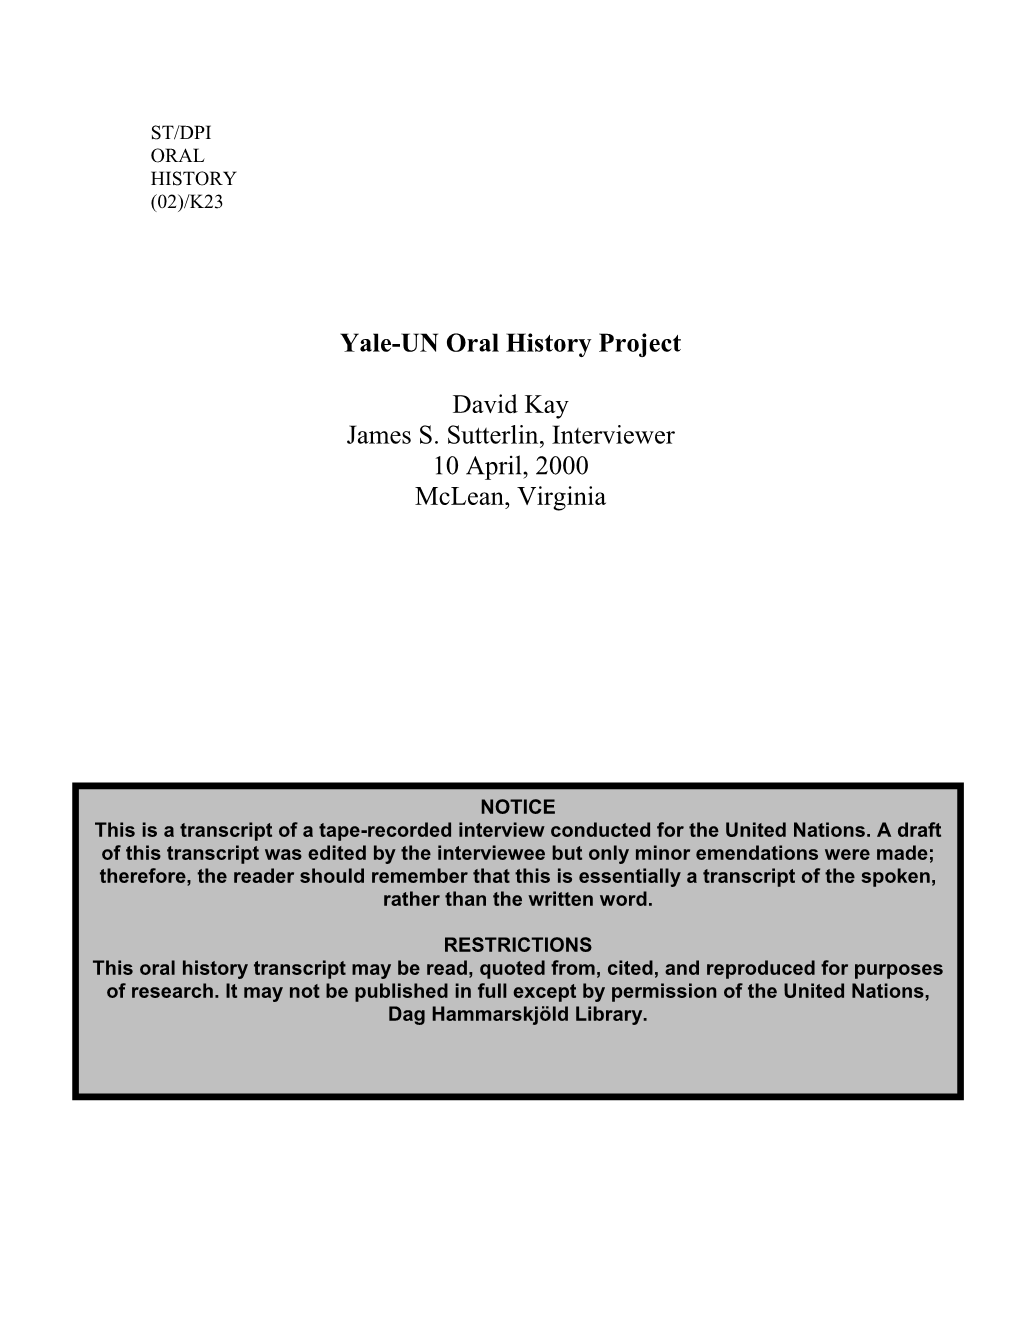 Yale-UN Oral History Project David Kay James S. Sutterlin, Interviewer April 10,2000 Mclean, Virginia